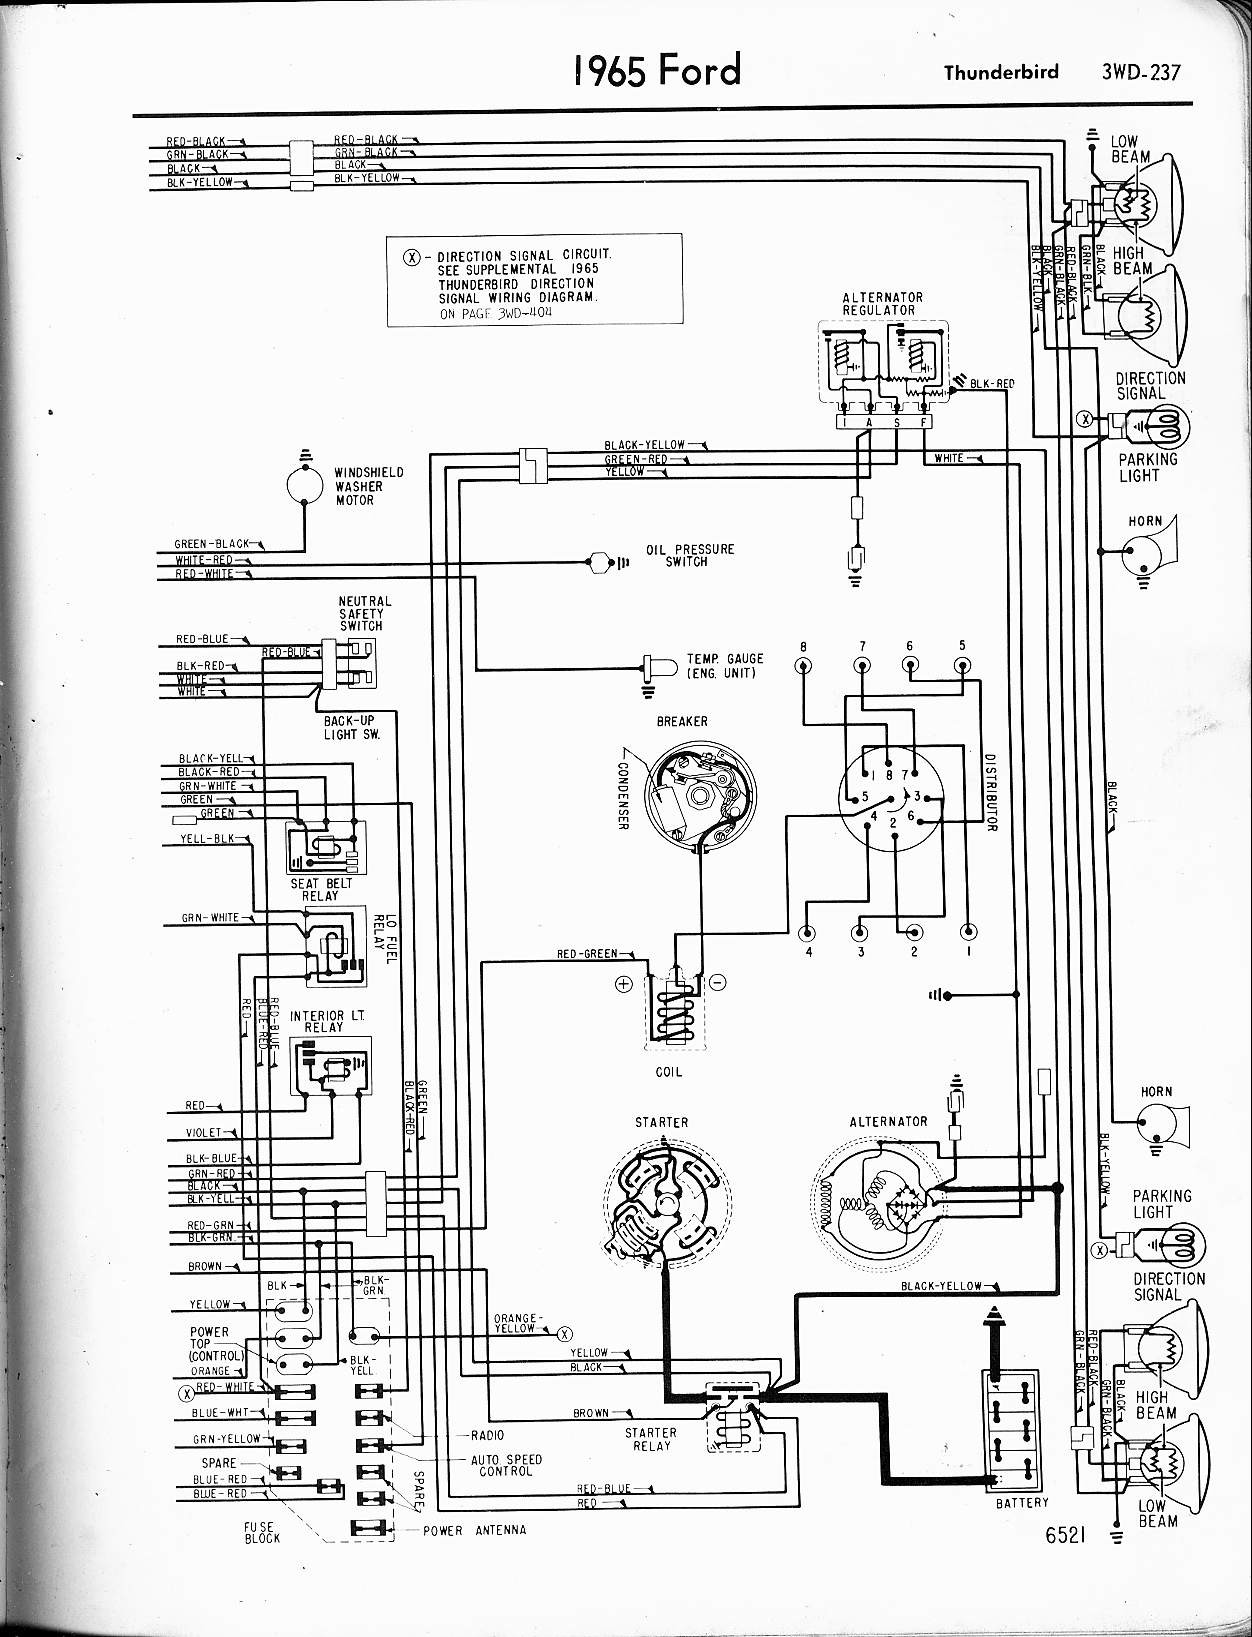 1972 Bronco Alternator Wiring Diagram 1972 ford Regulator Wiring Diagram